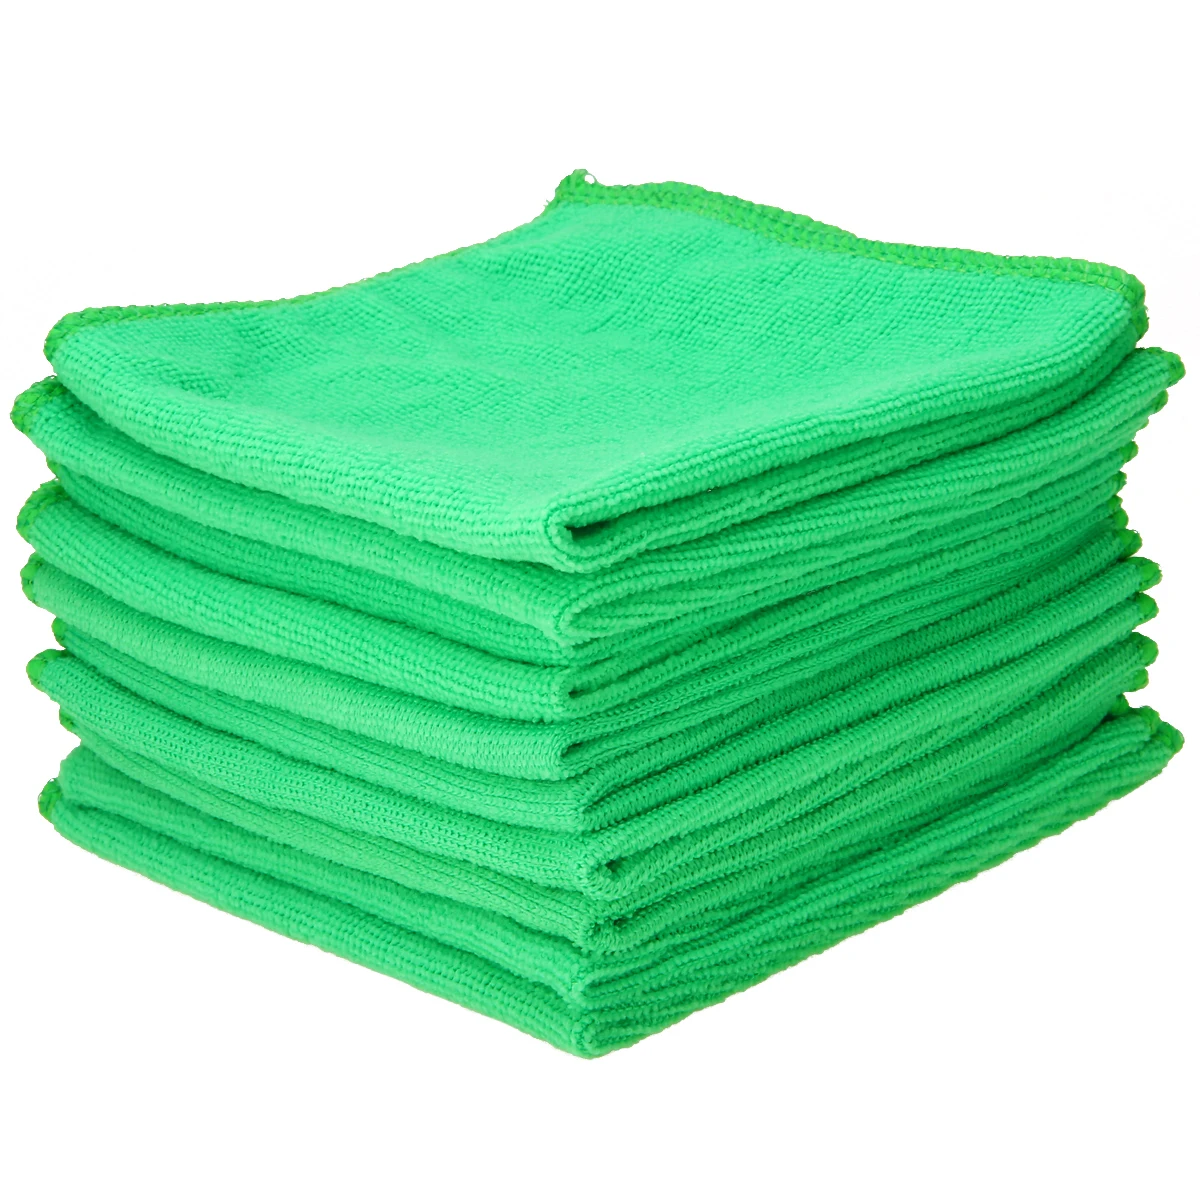 10 Pcs Microfiber Washcloth Auto Car Care Cleaning Towels Soft Cloths Green nEW